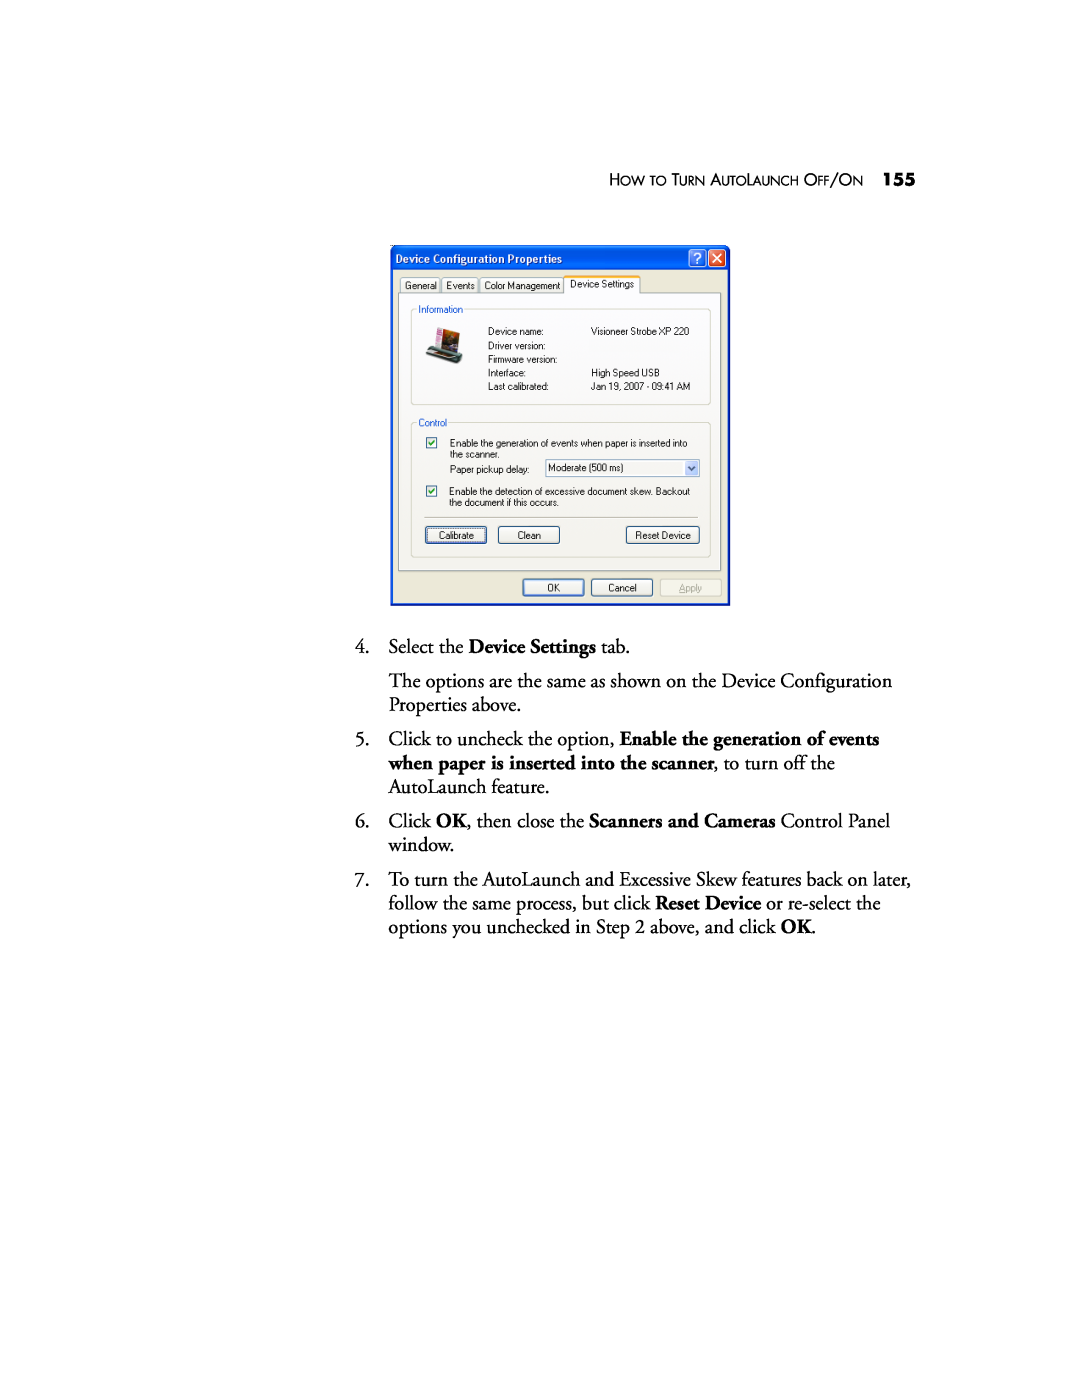 Visioneer XP220 manual Select the Device Settings tab 